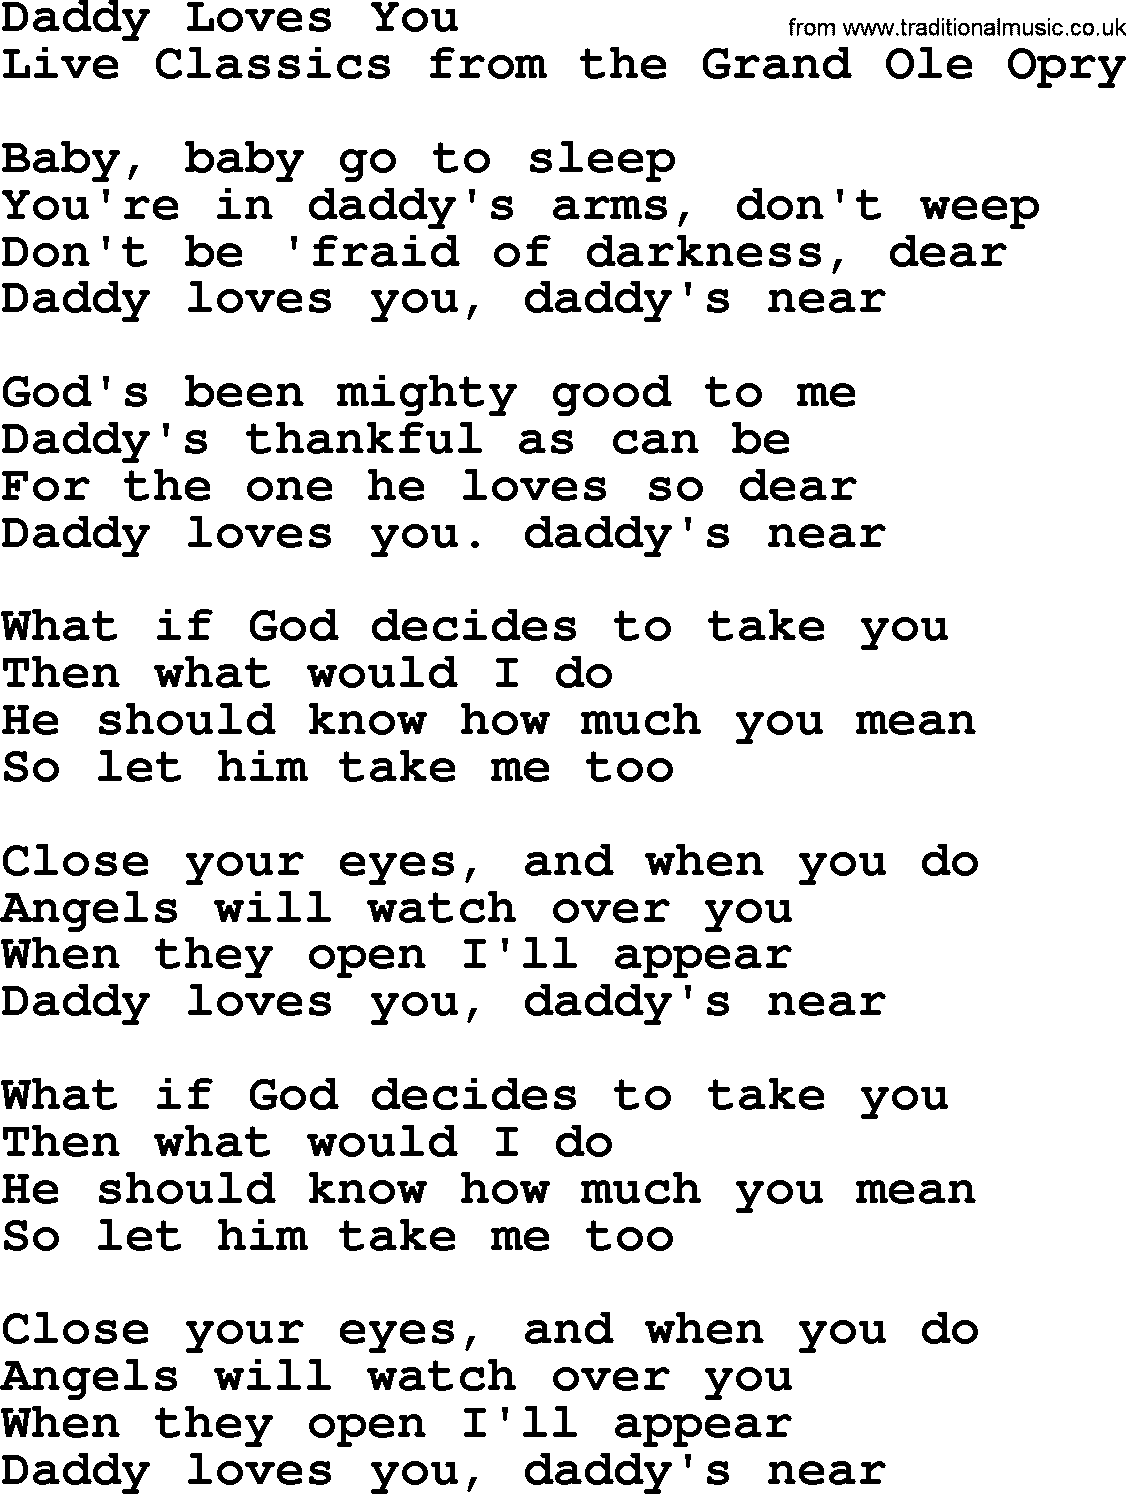 Marty Robbins song: Daddy Loves You, lyrics